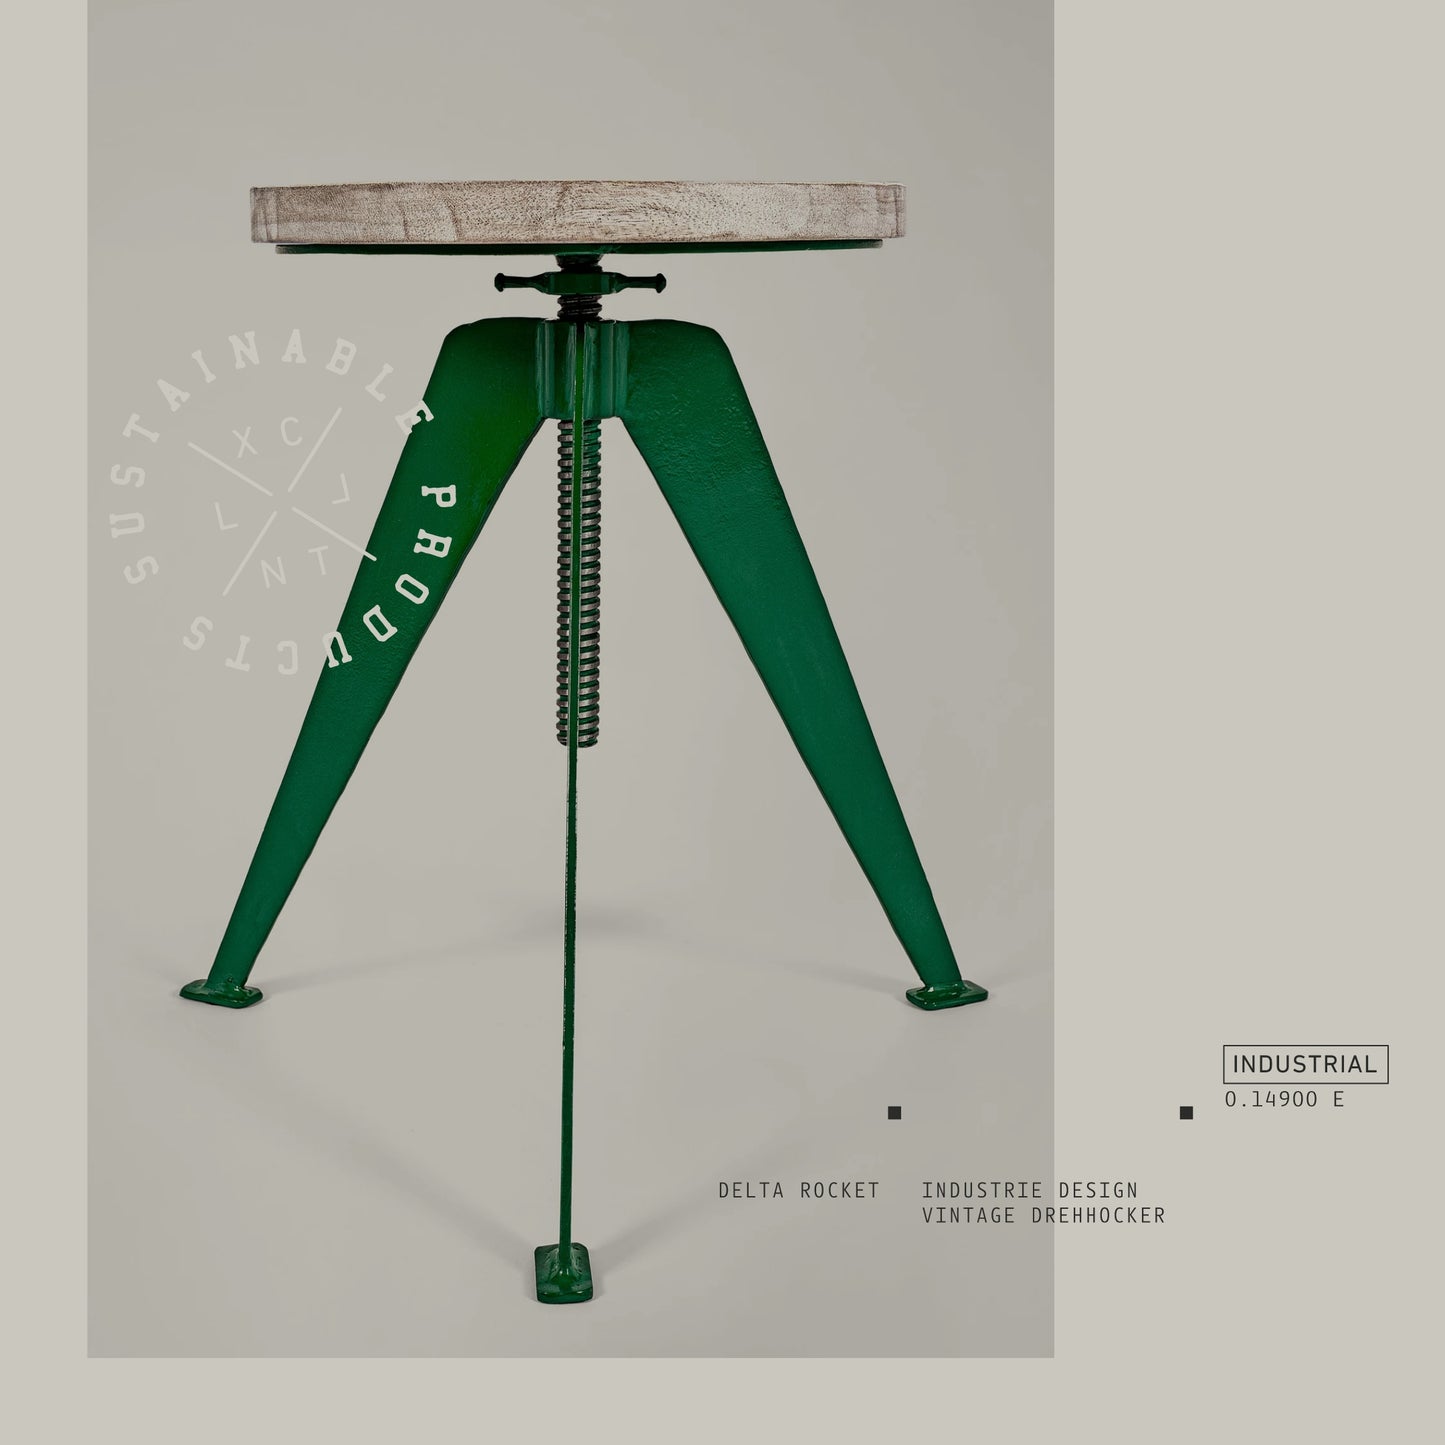 Delta Rocket - Industrial design vintage metal swivel chair with wooden seat